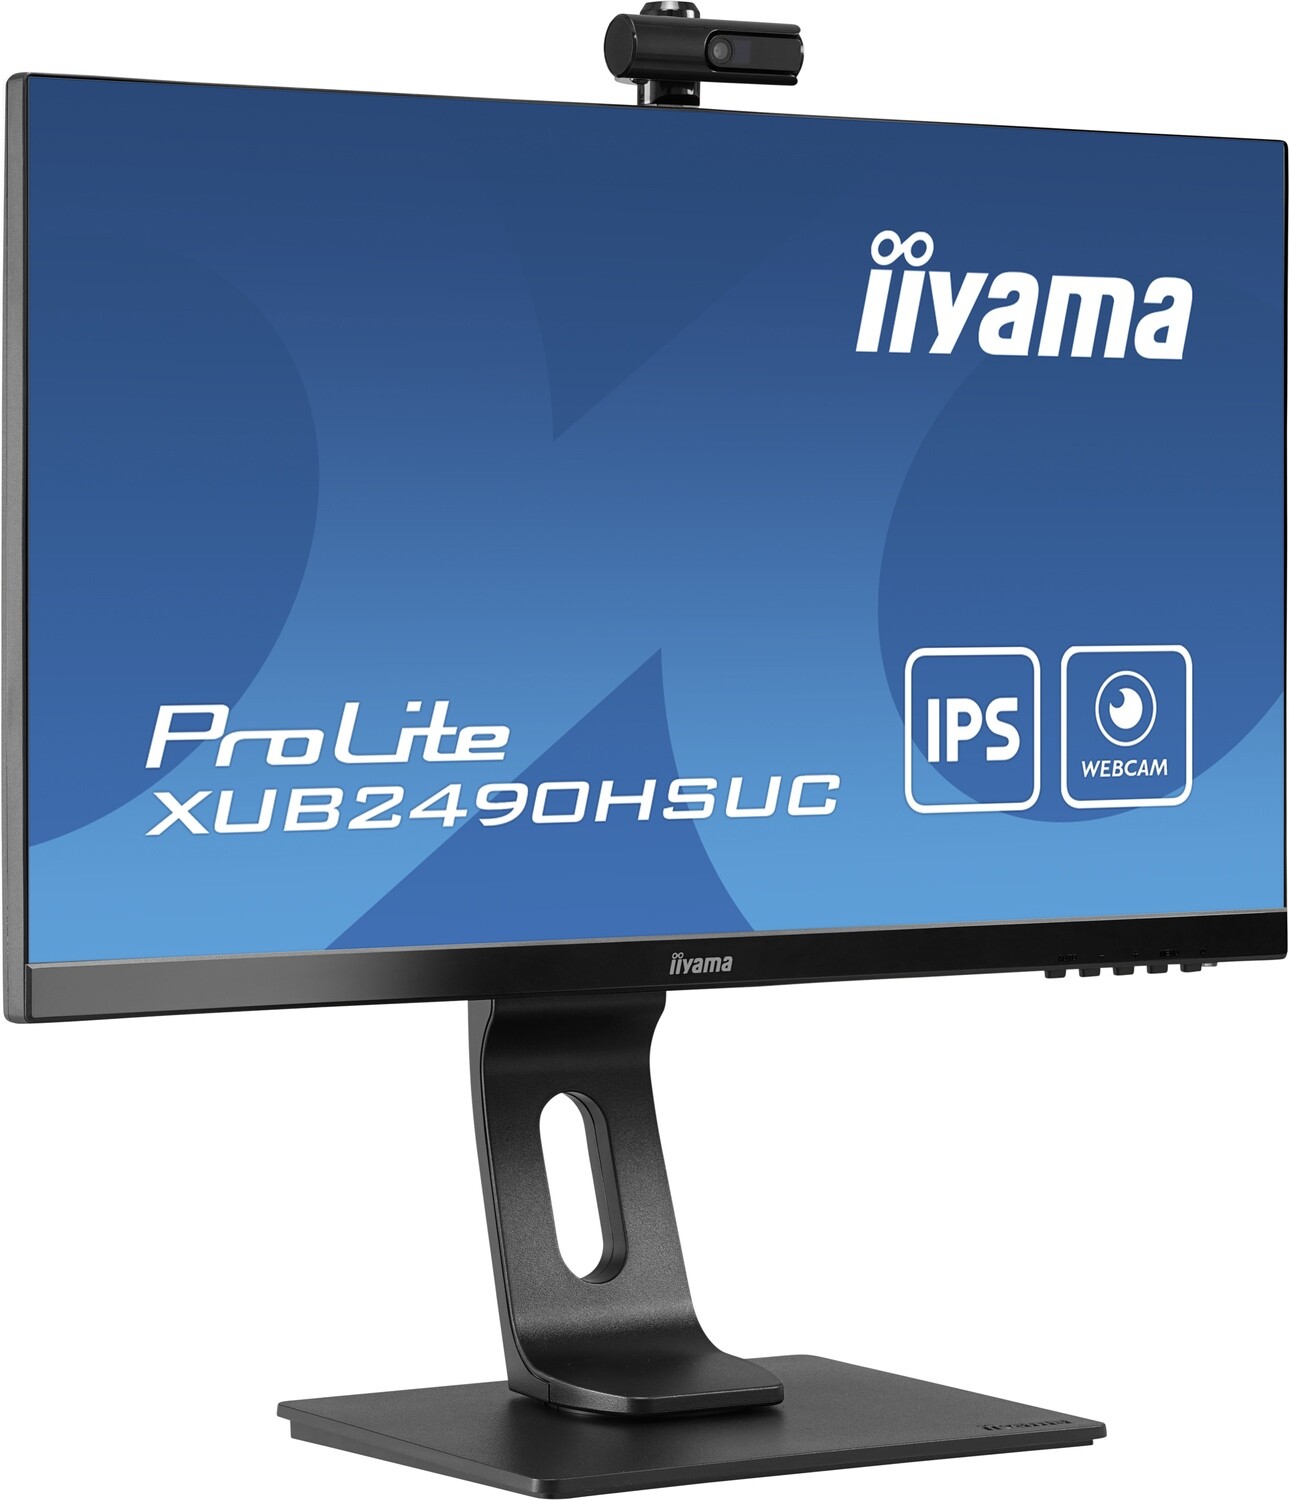 IIYAMA Monitor LED XUB2490HSUC-B1 24" ETE IPS, 1920x1080, Webcam 1080P Auto Focus, 13cm Height Adj. Stand, Pivot, 5ms, 250 cd/m², Speakers, HDMI, DisplayPort, USB2.0 port